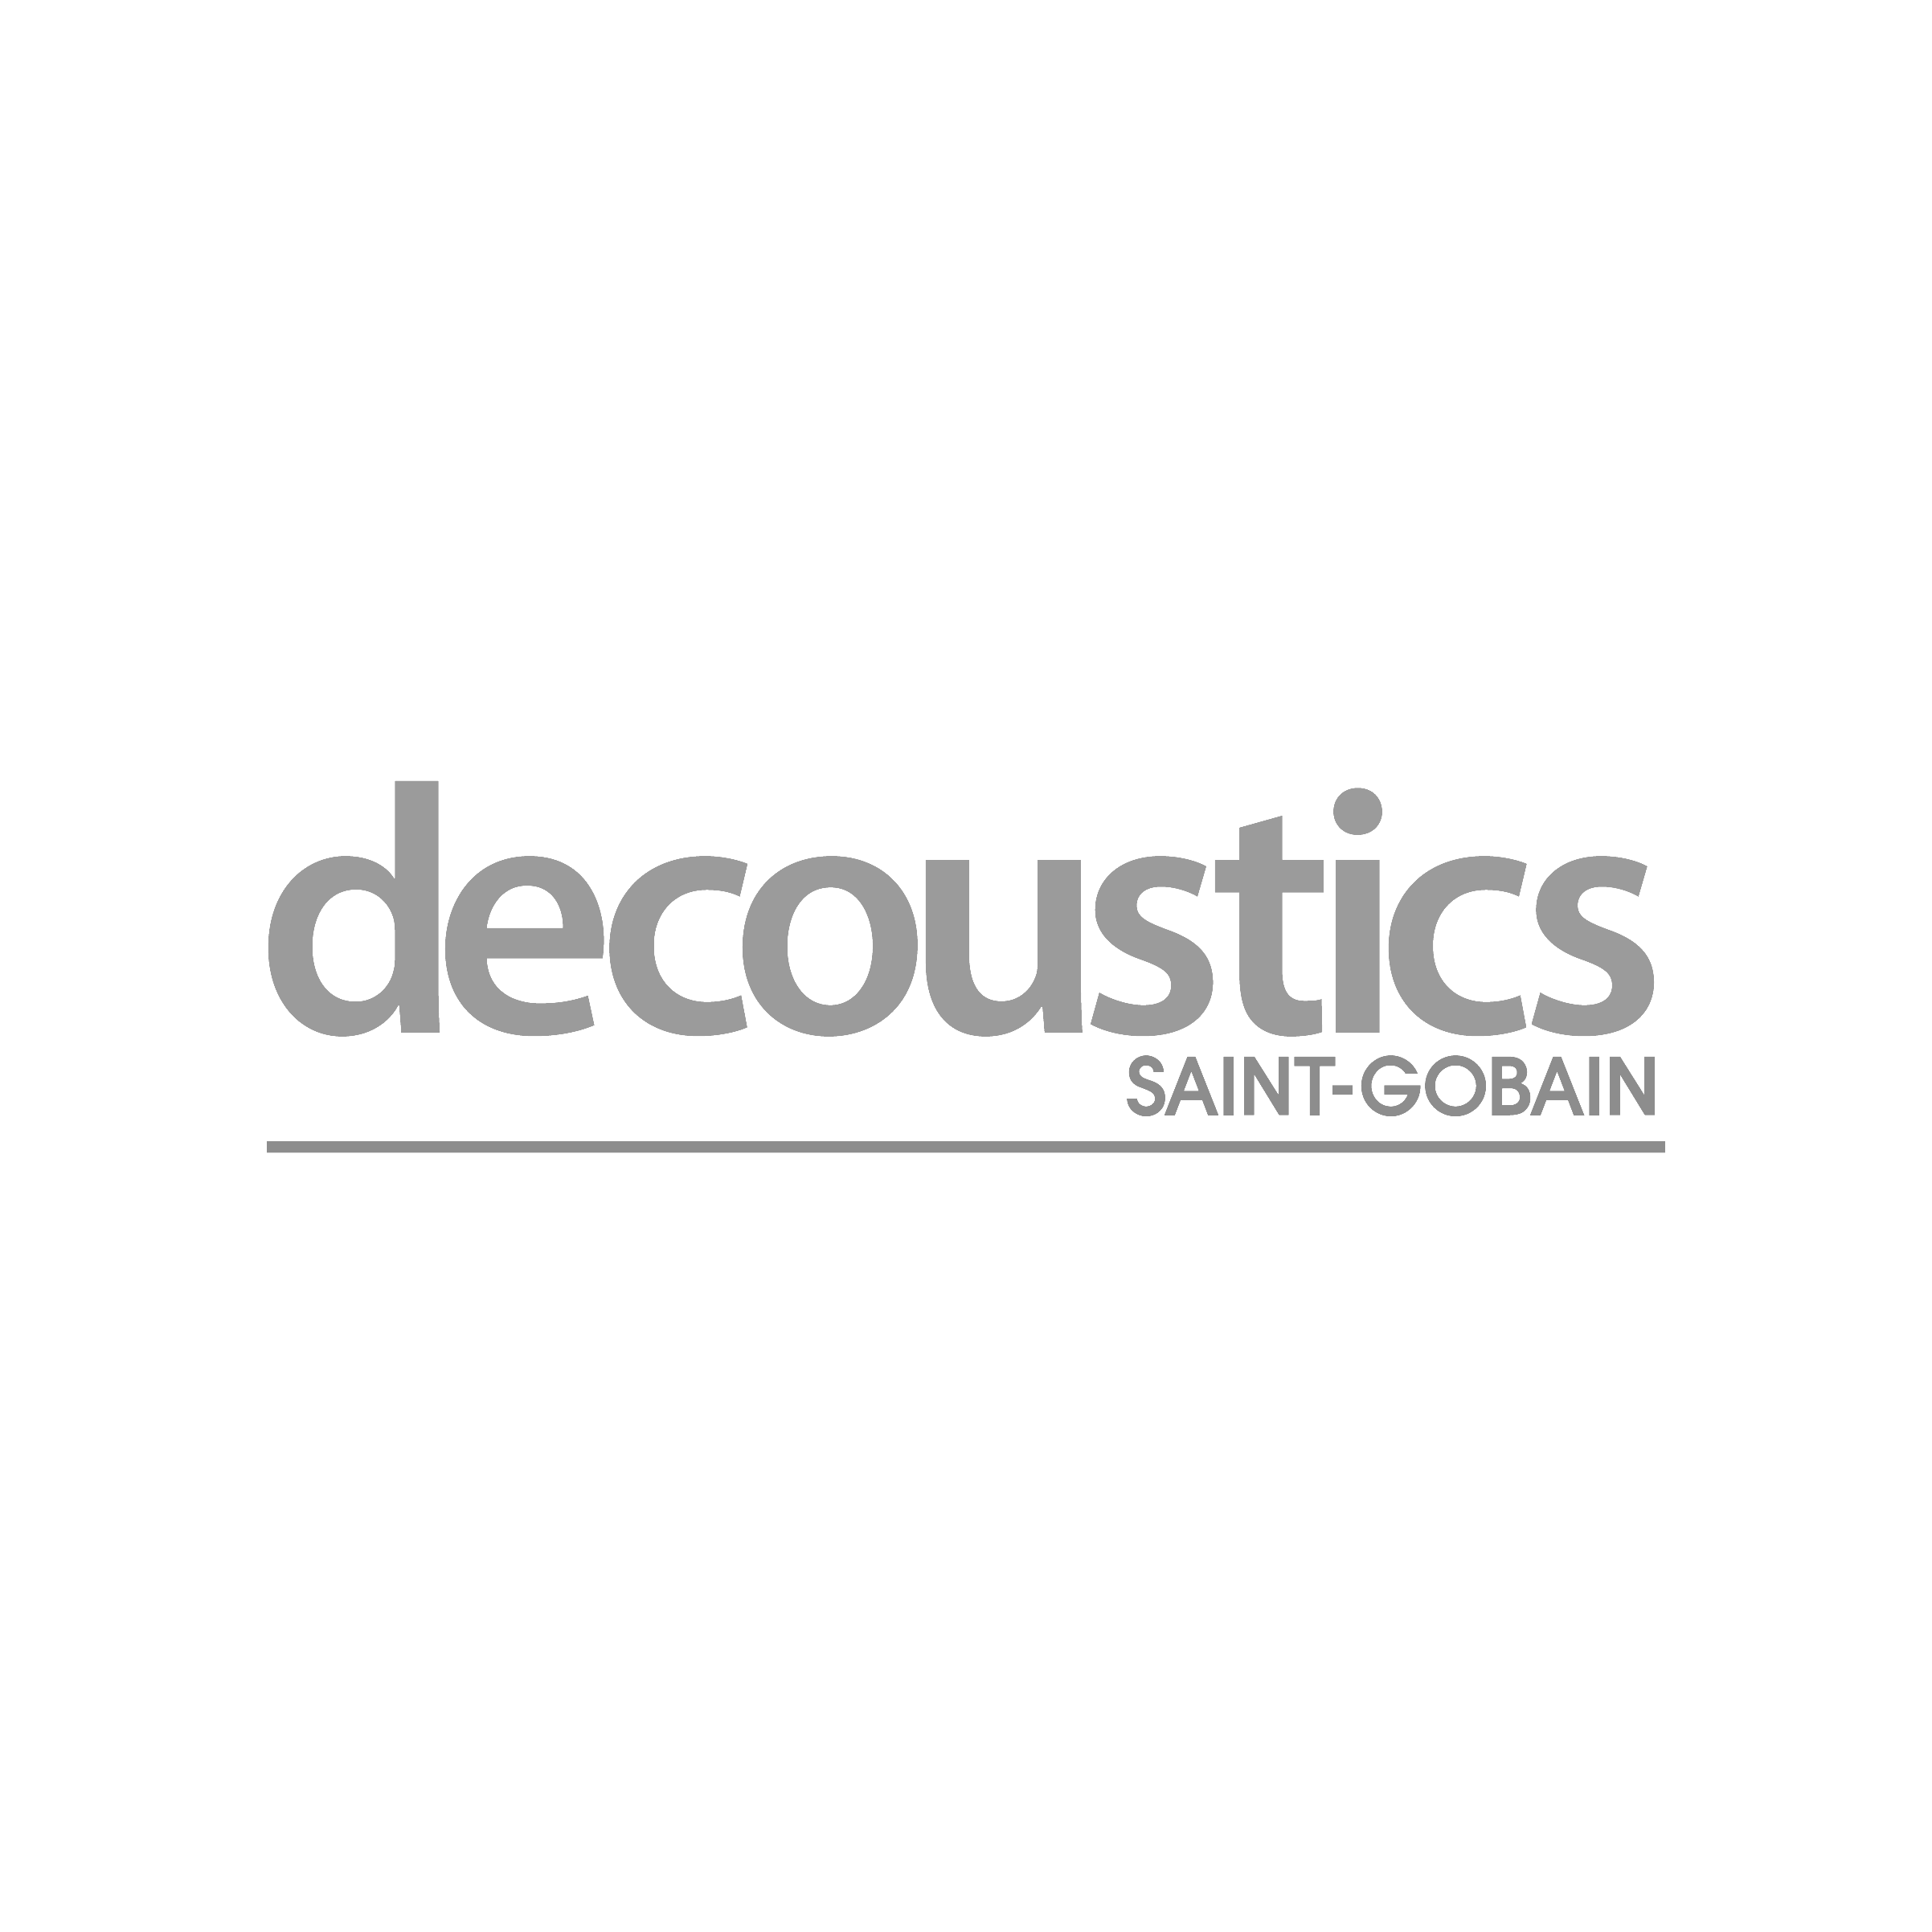 Decoustics